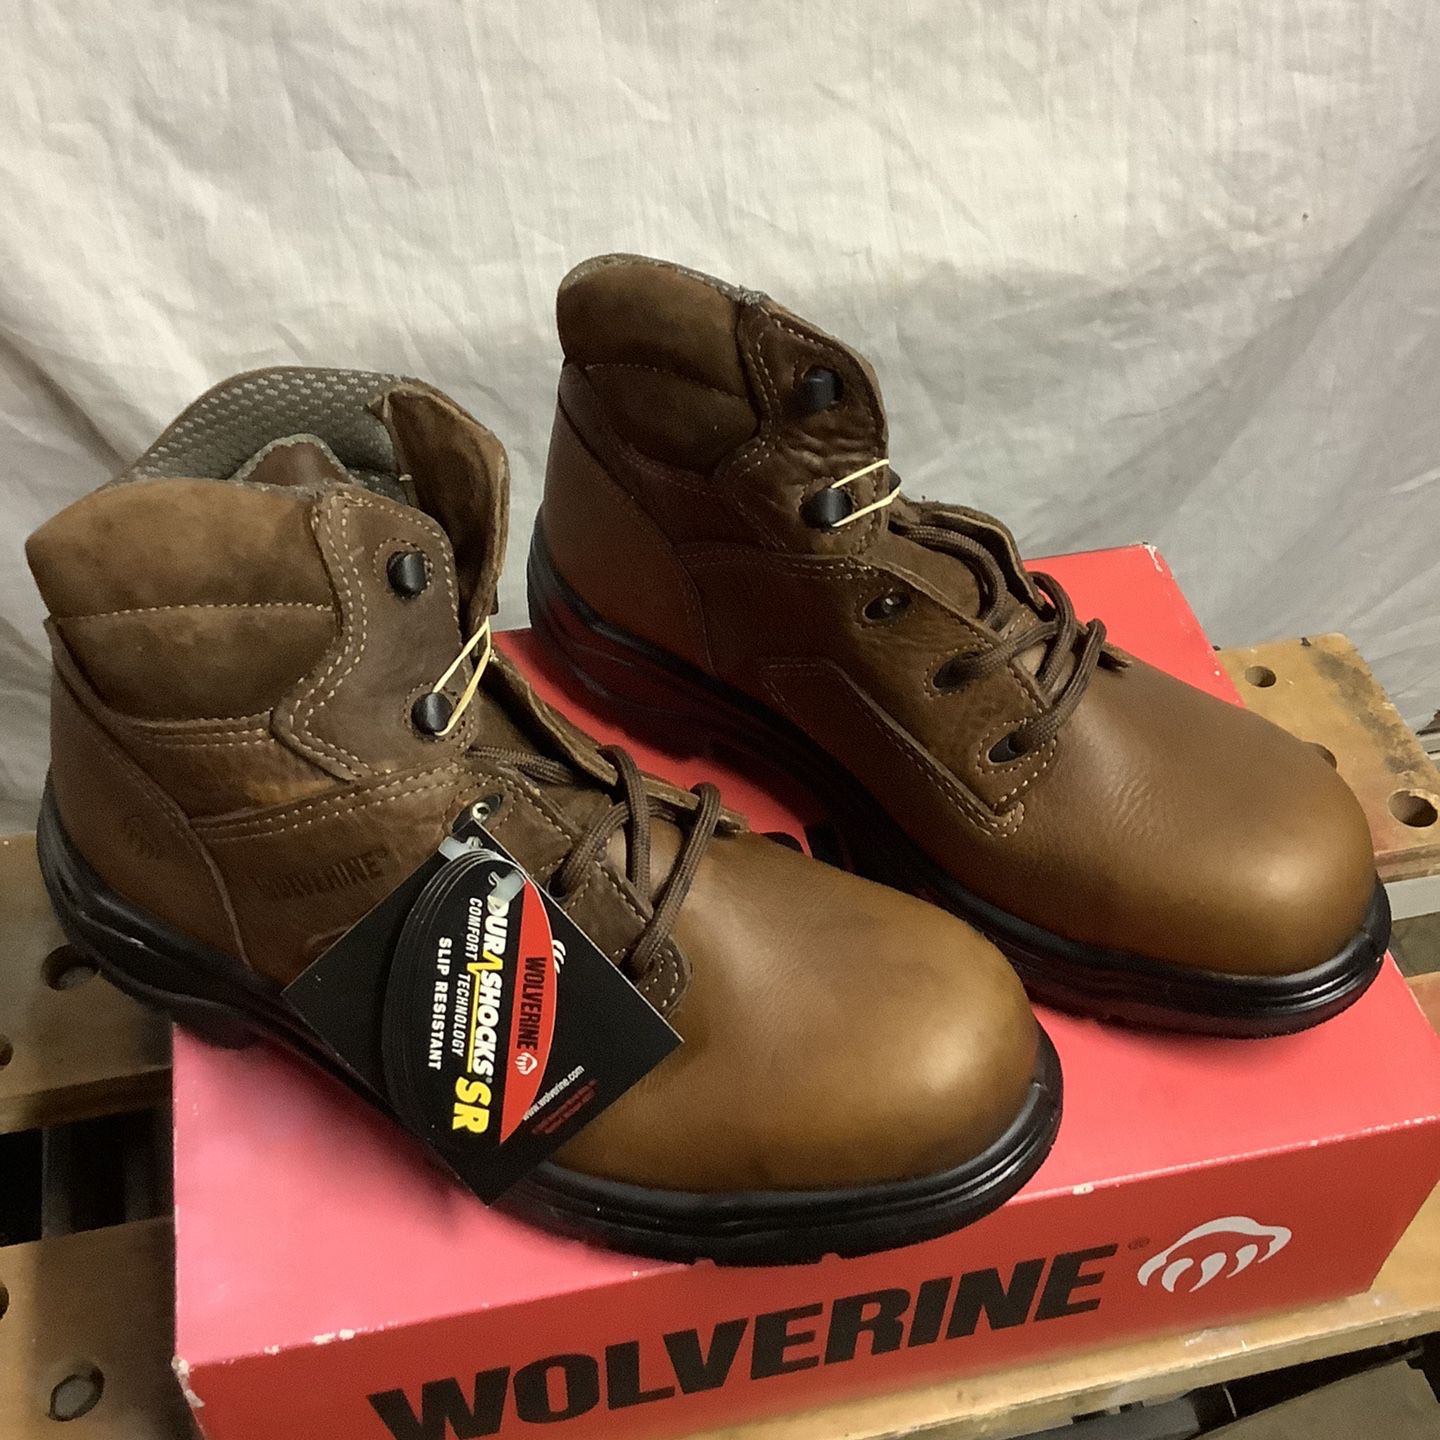 Wolverine Safety Toe Work Boots